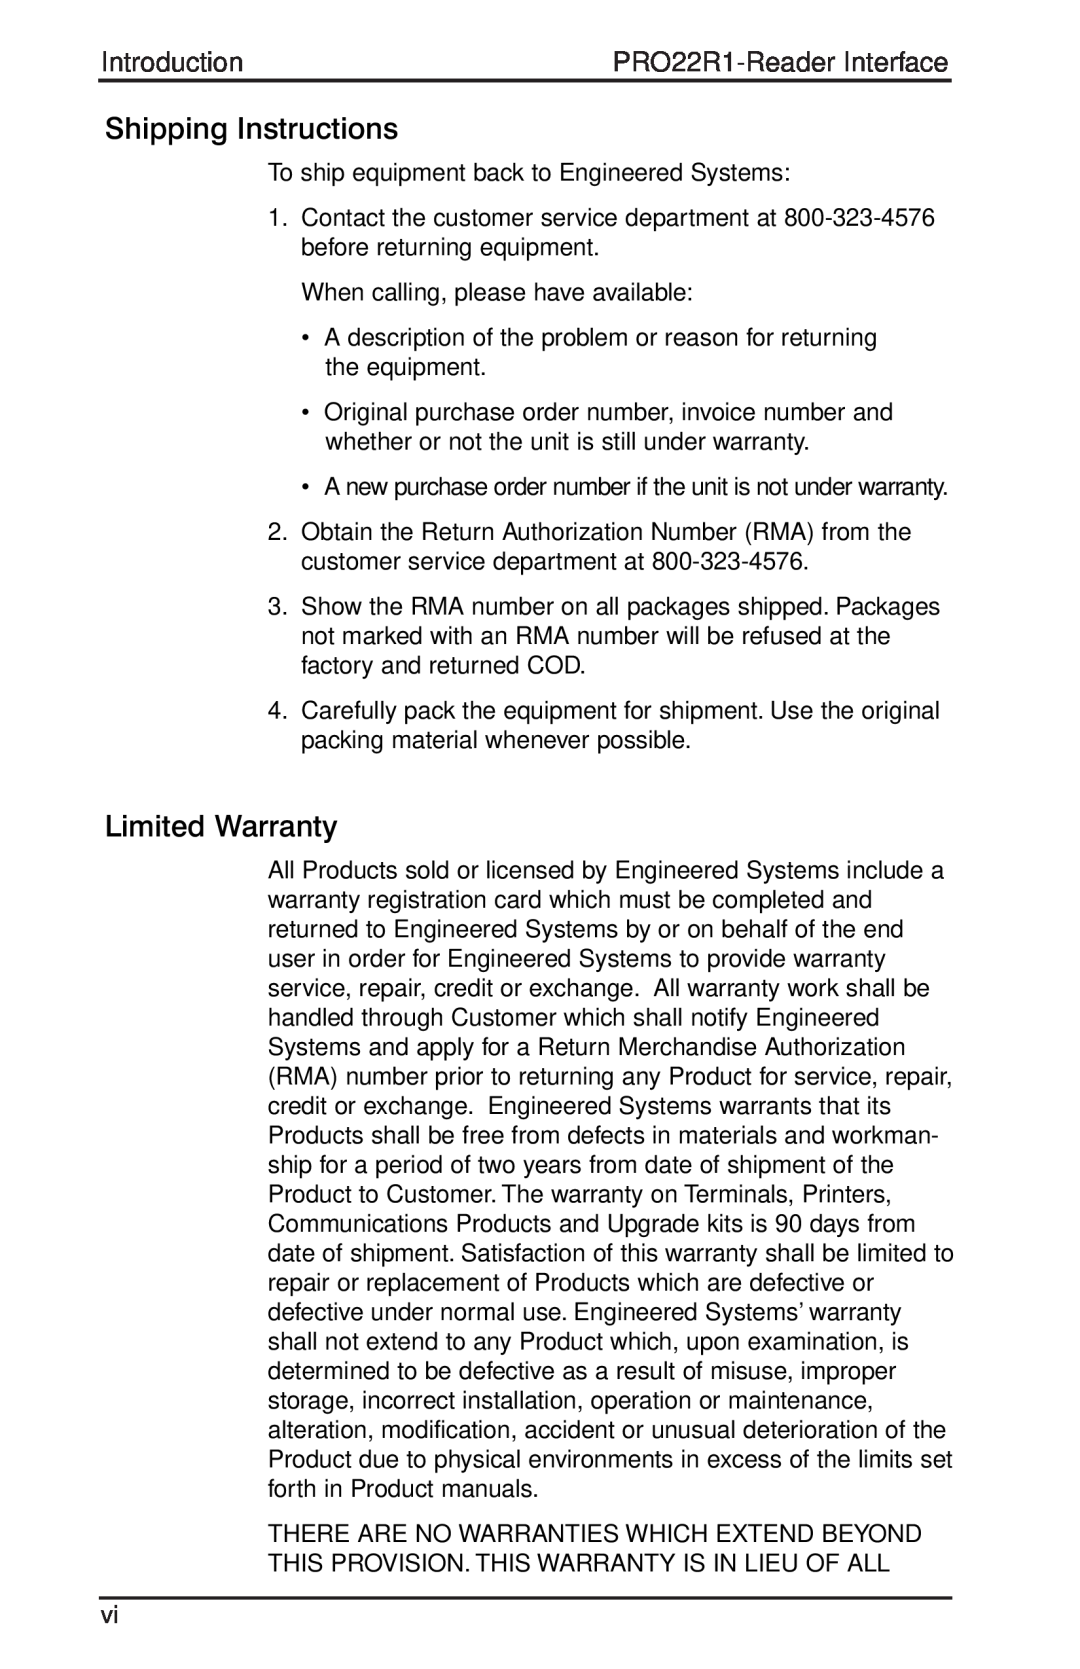 Honeywell PRO-2200 installation manual Shipping Instructions, Limited Warranty 